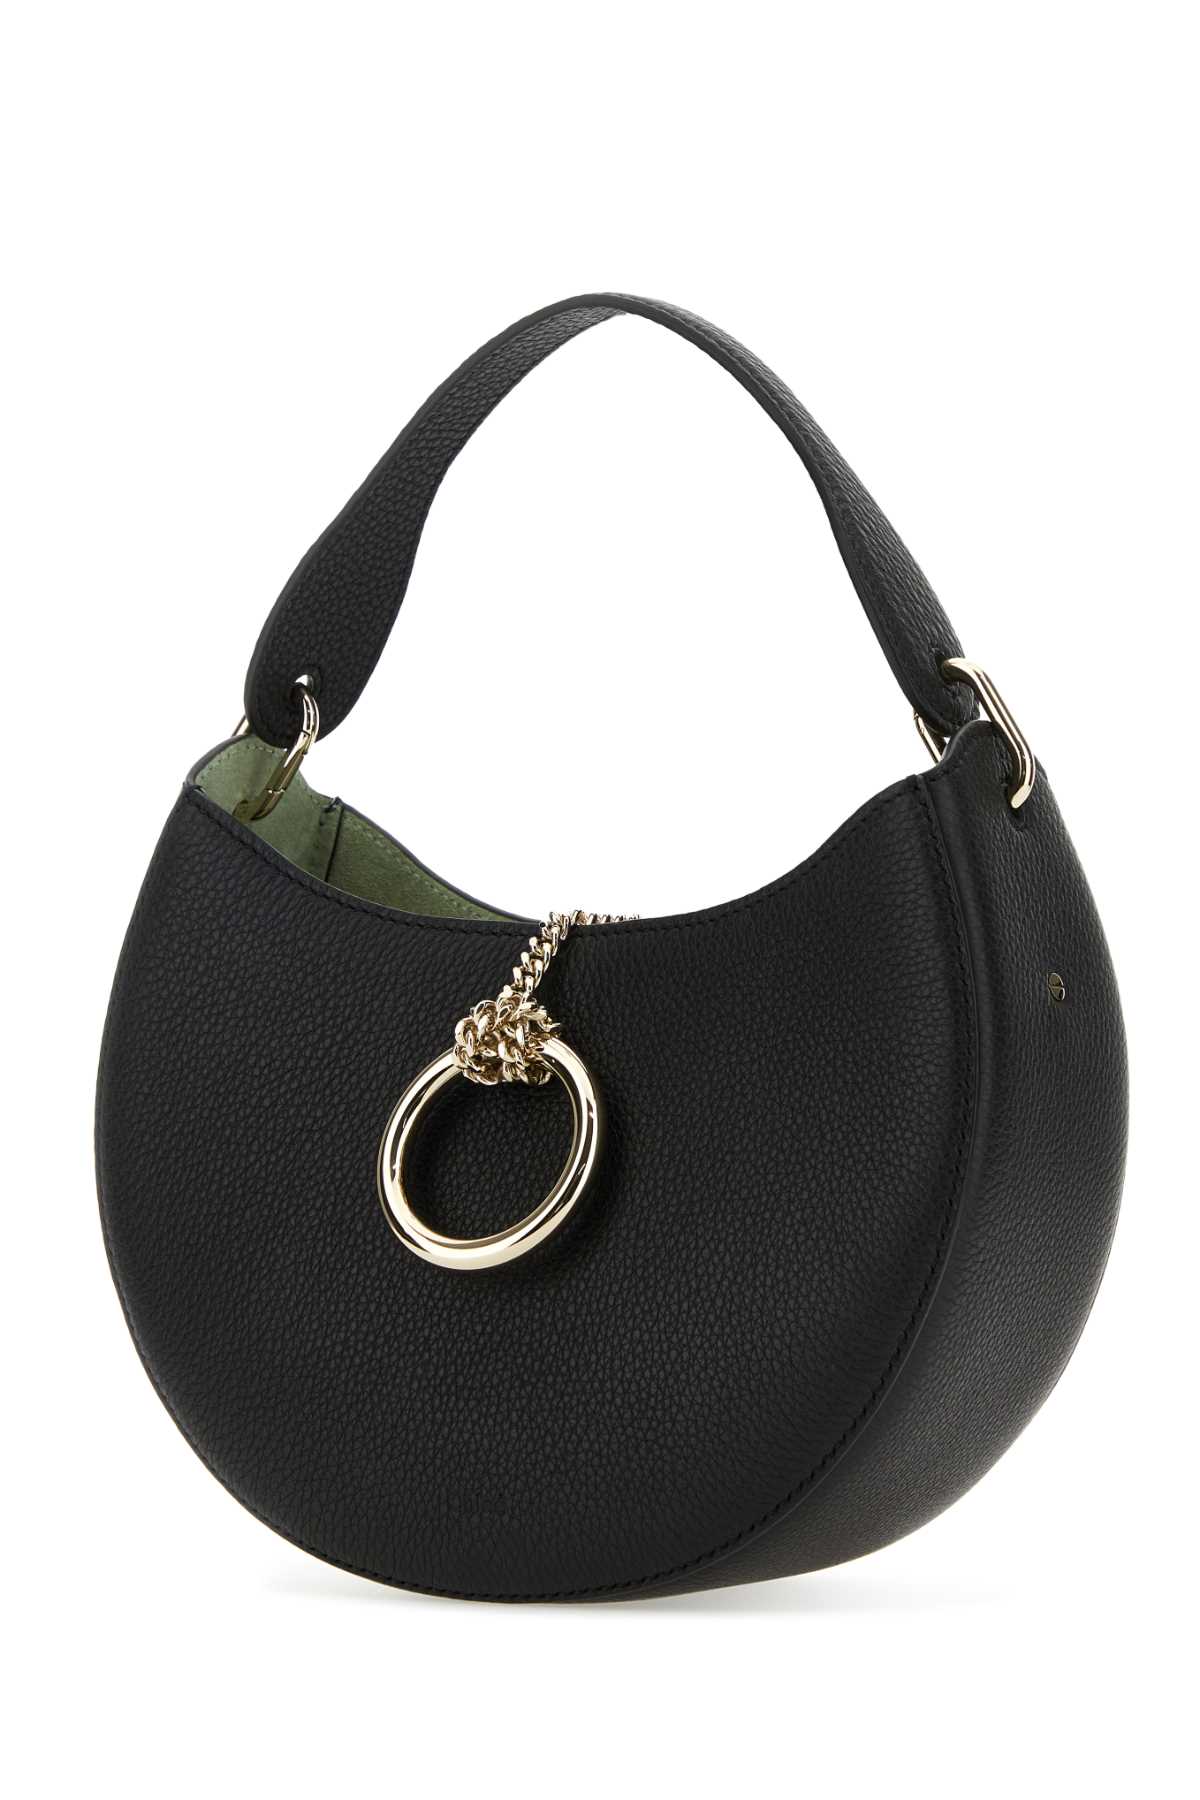 Chloé Black Leather Small Arlene Handbag